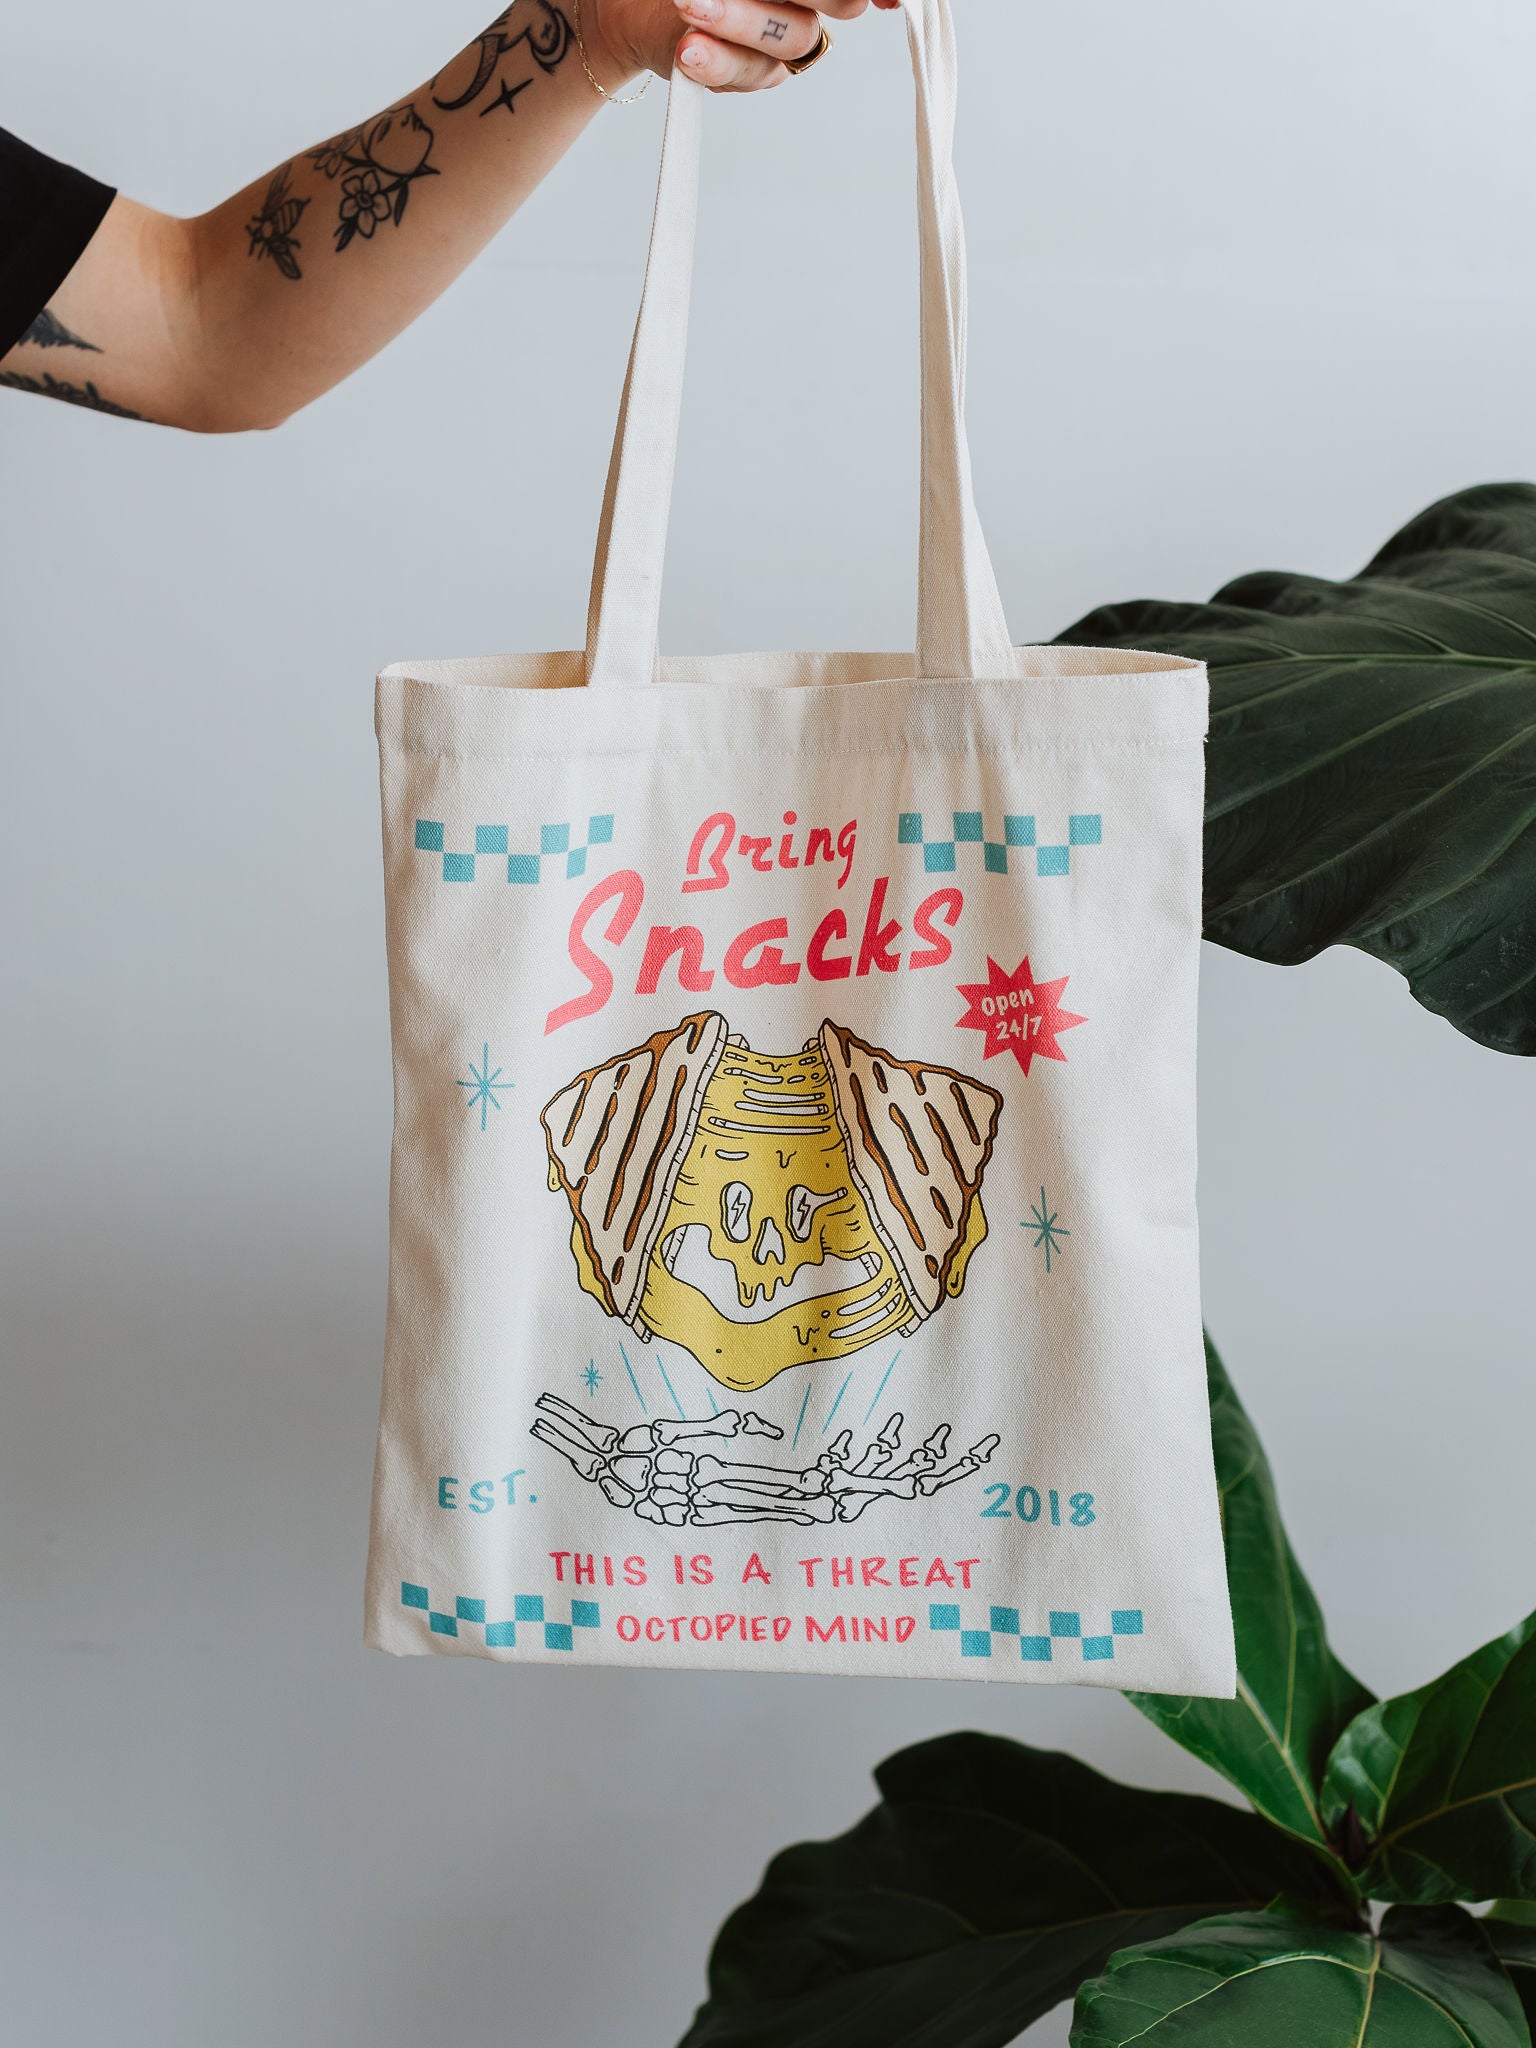 Bring Snacks Tote Bag - Octopied Mind